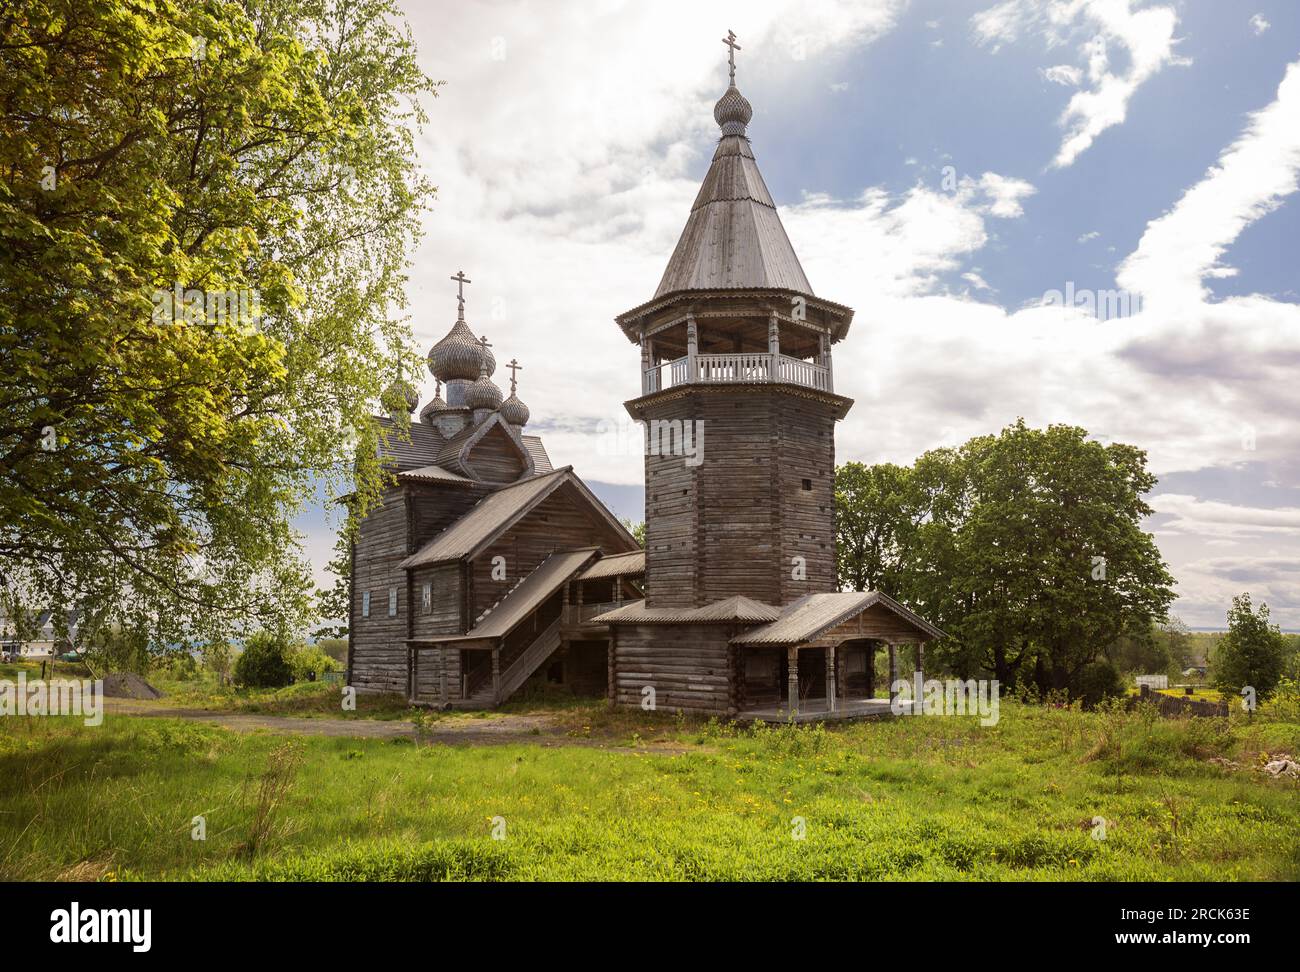 Bellissima vecchia chiesa in legno di Demetrio di Tessalonica Myrrrh-streaming a Shcheleyki, regione di Leningrado, Russia Foto Stock